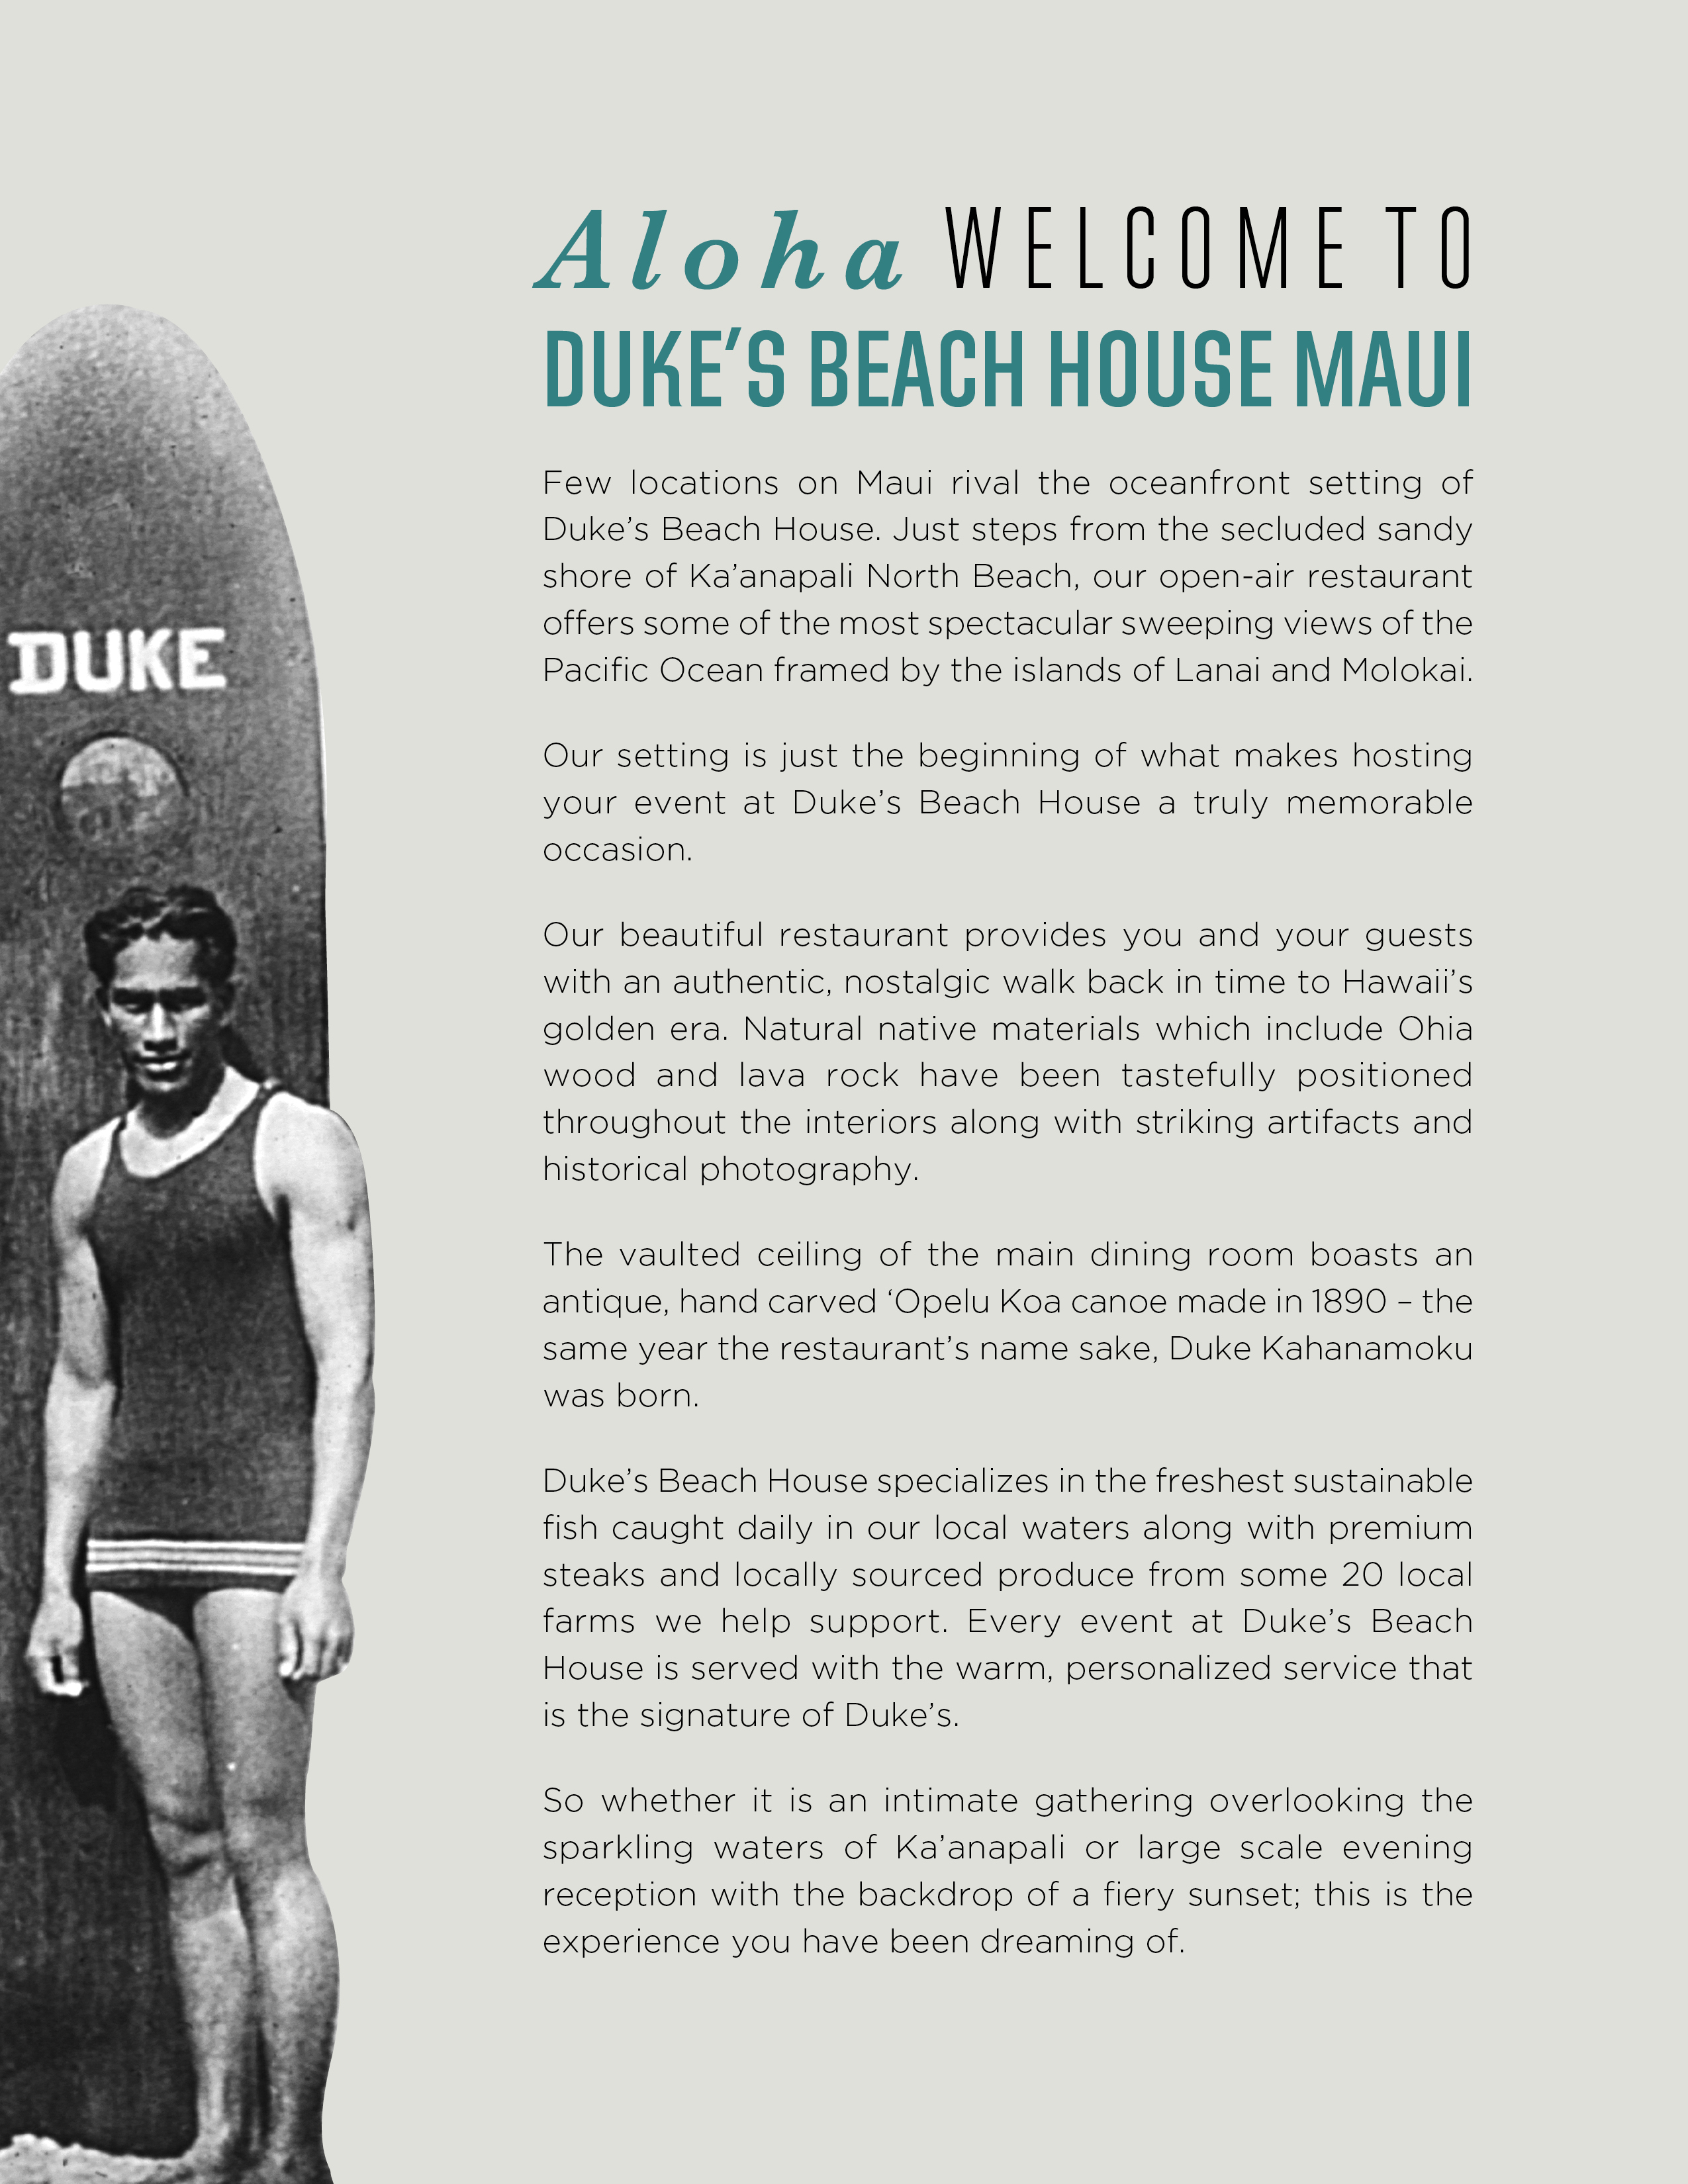 Brief of Duke's Beach House Maui with duke next to a surfboard